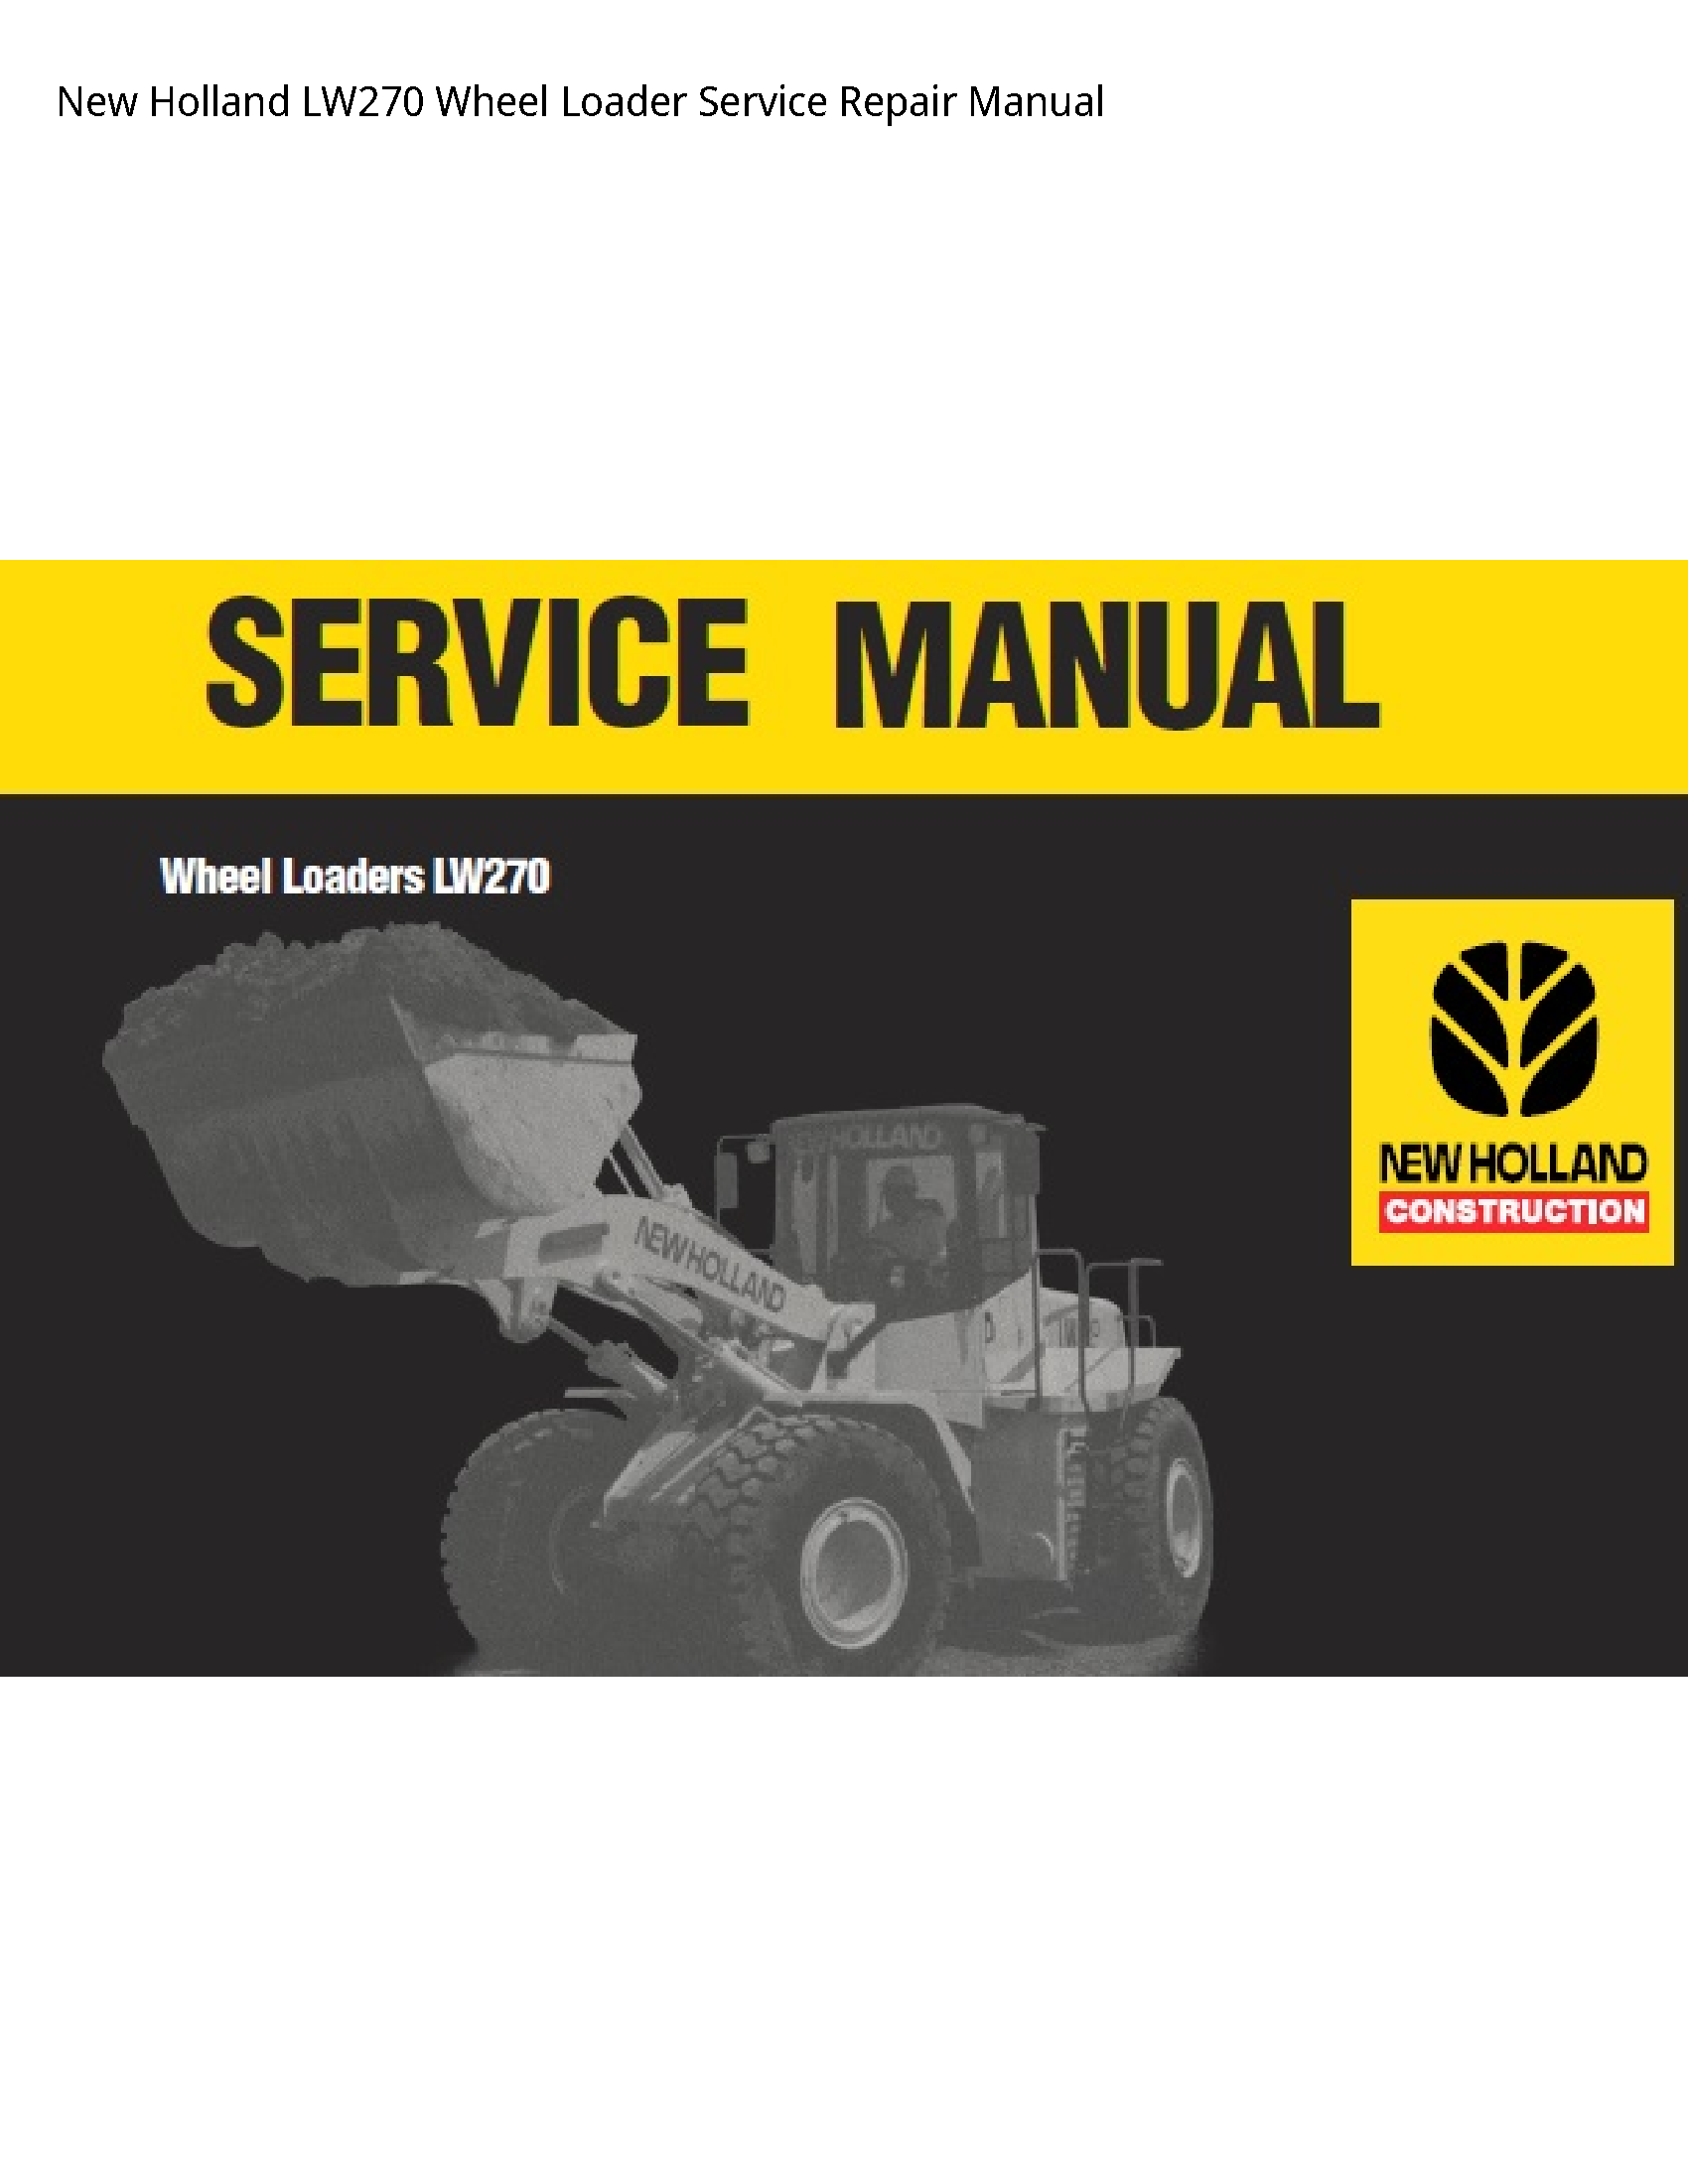 New Holland LW270 Wheel Loader manual